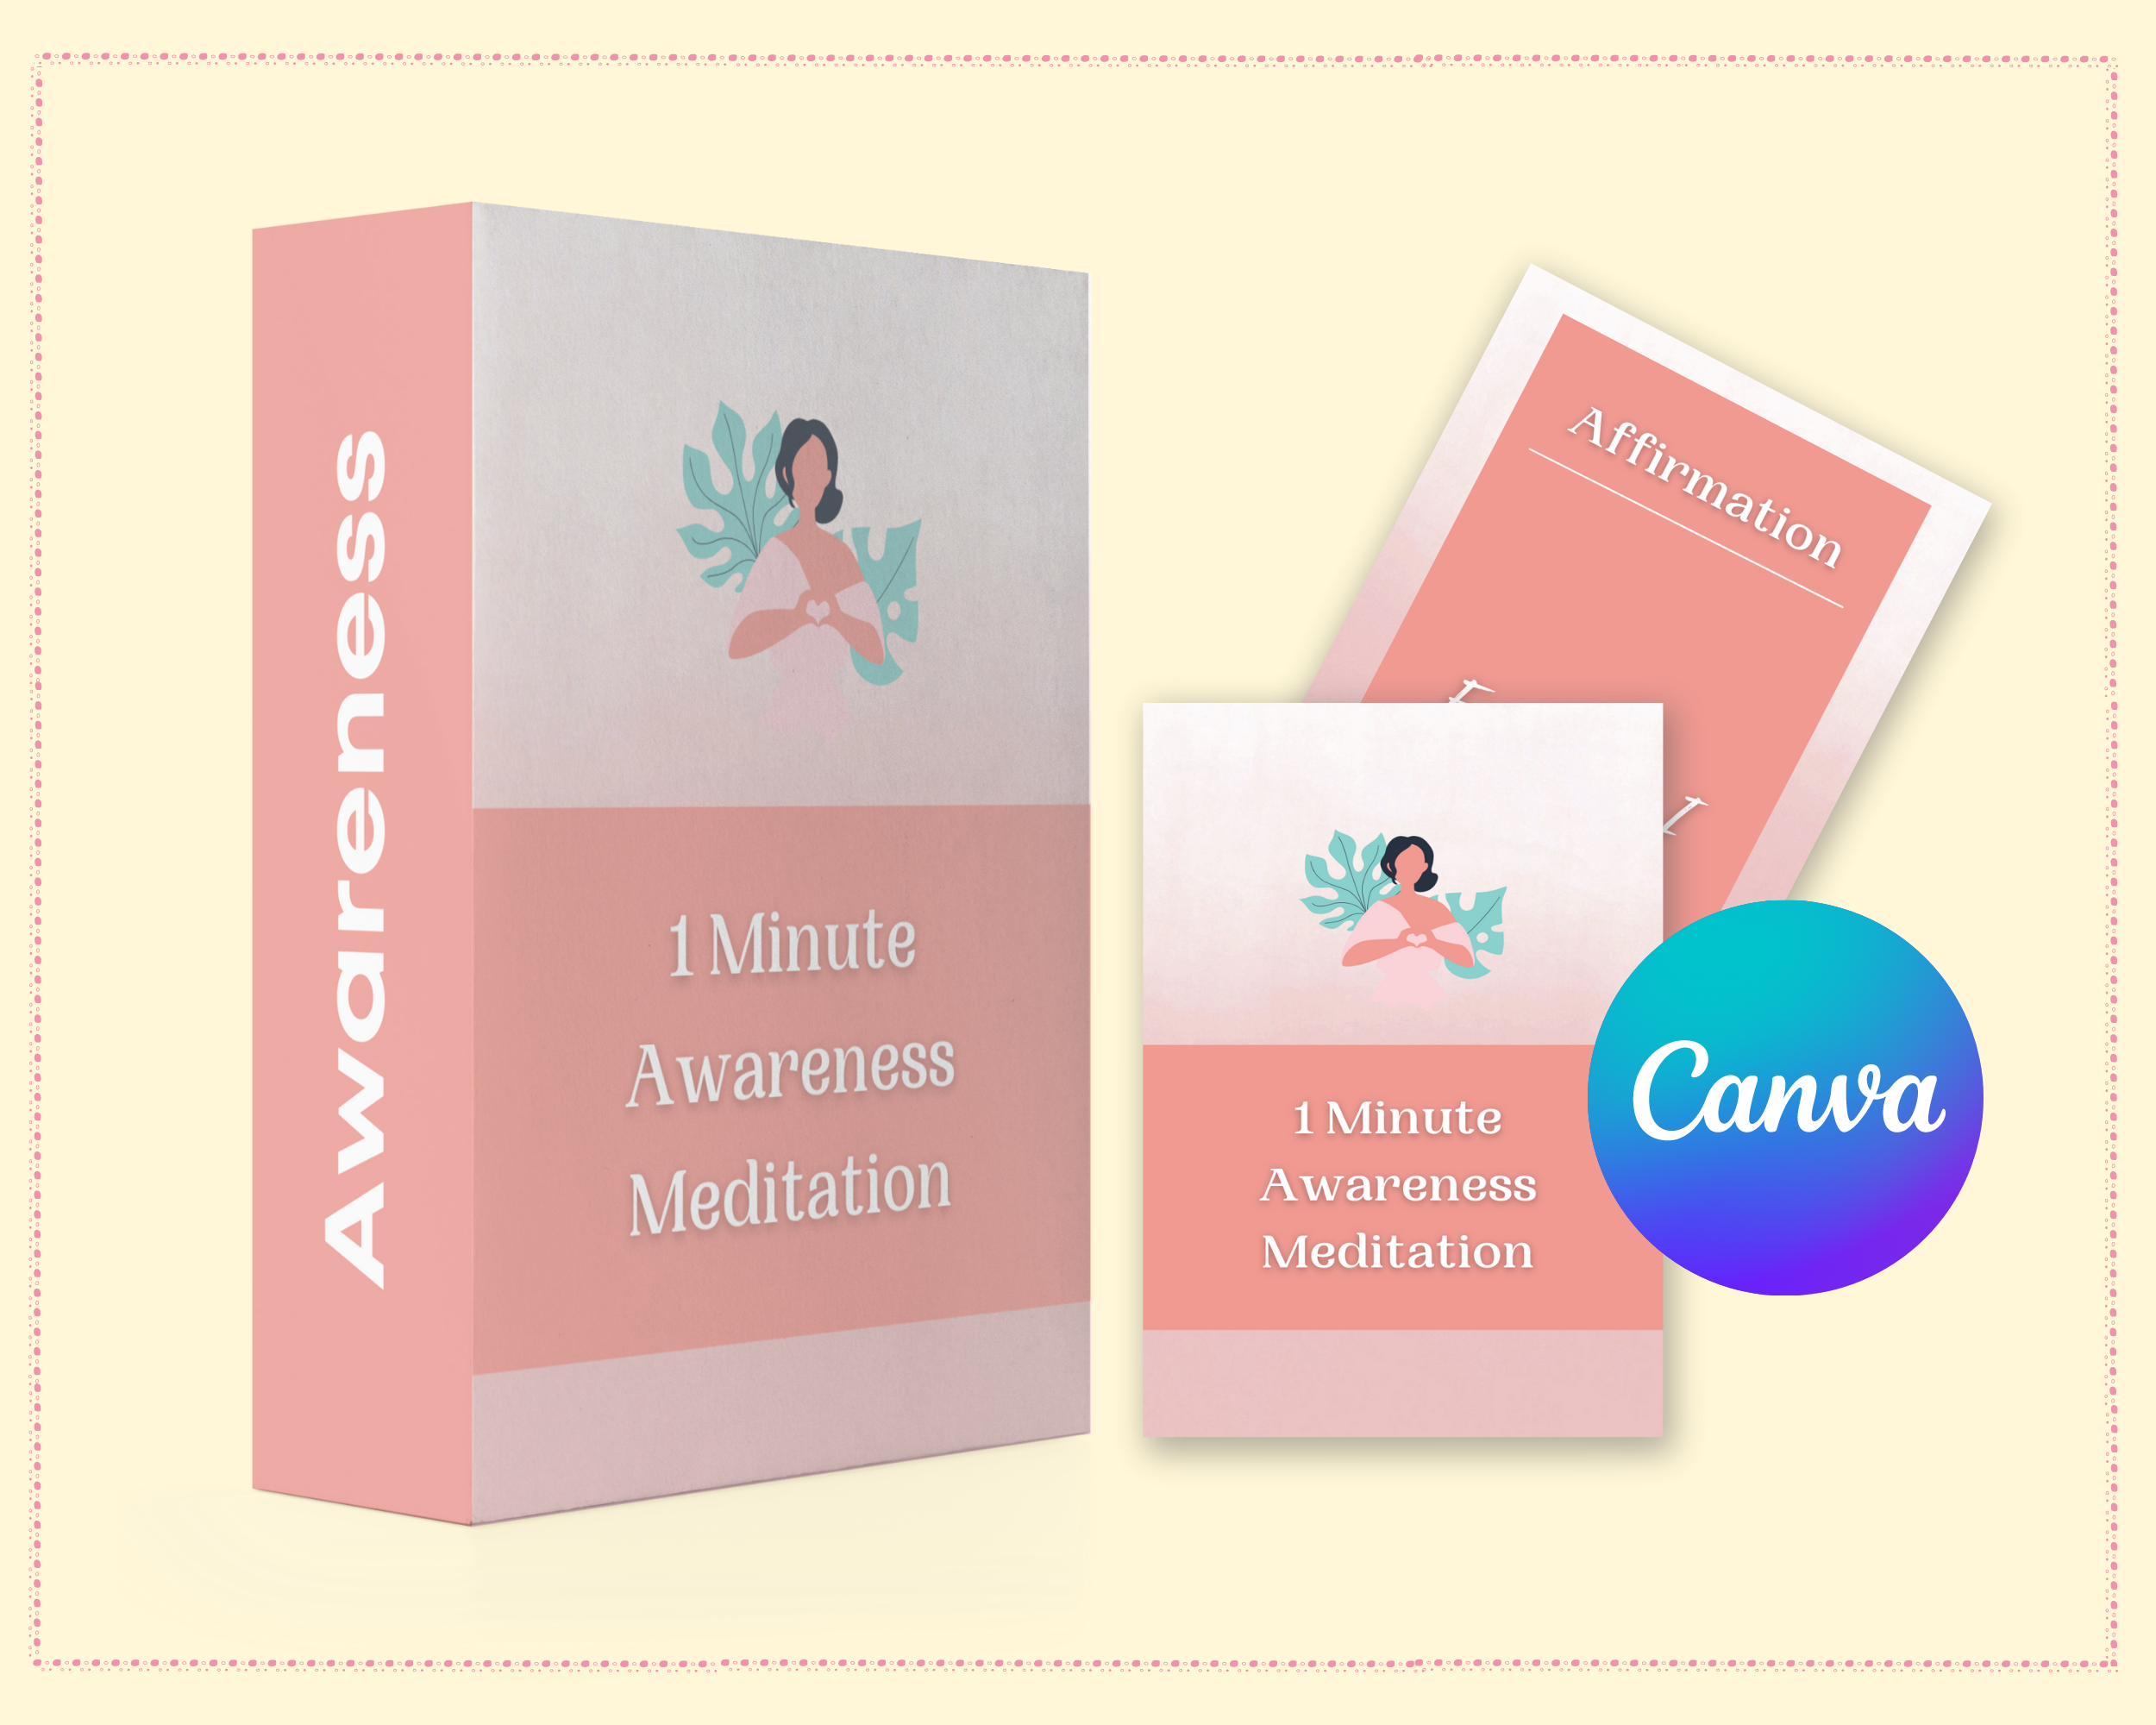 BUNDLE of 11 Cards Decks in Canva | Meditation Card Decks | Commercial Use